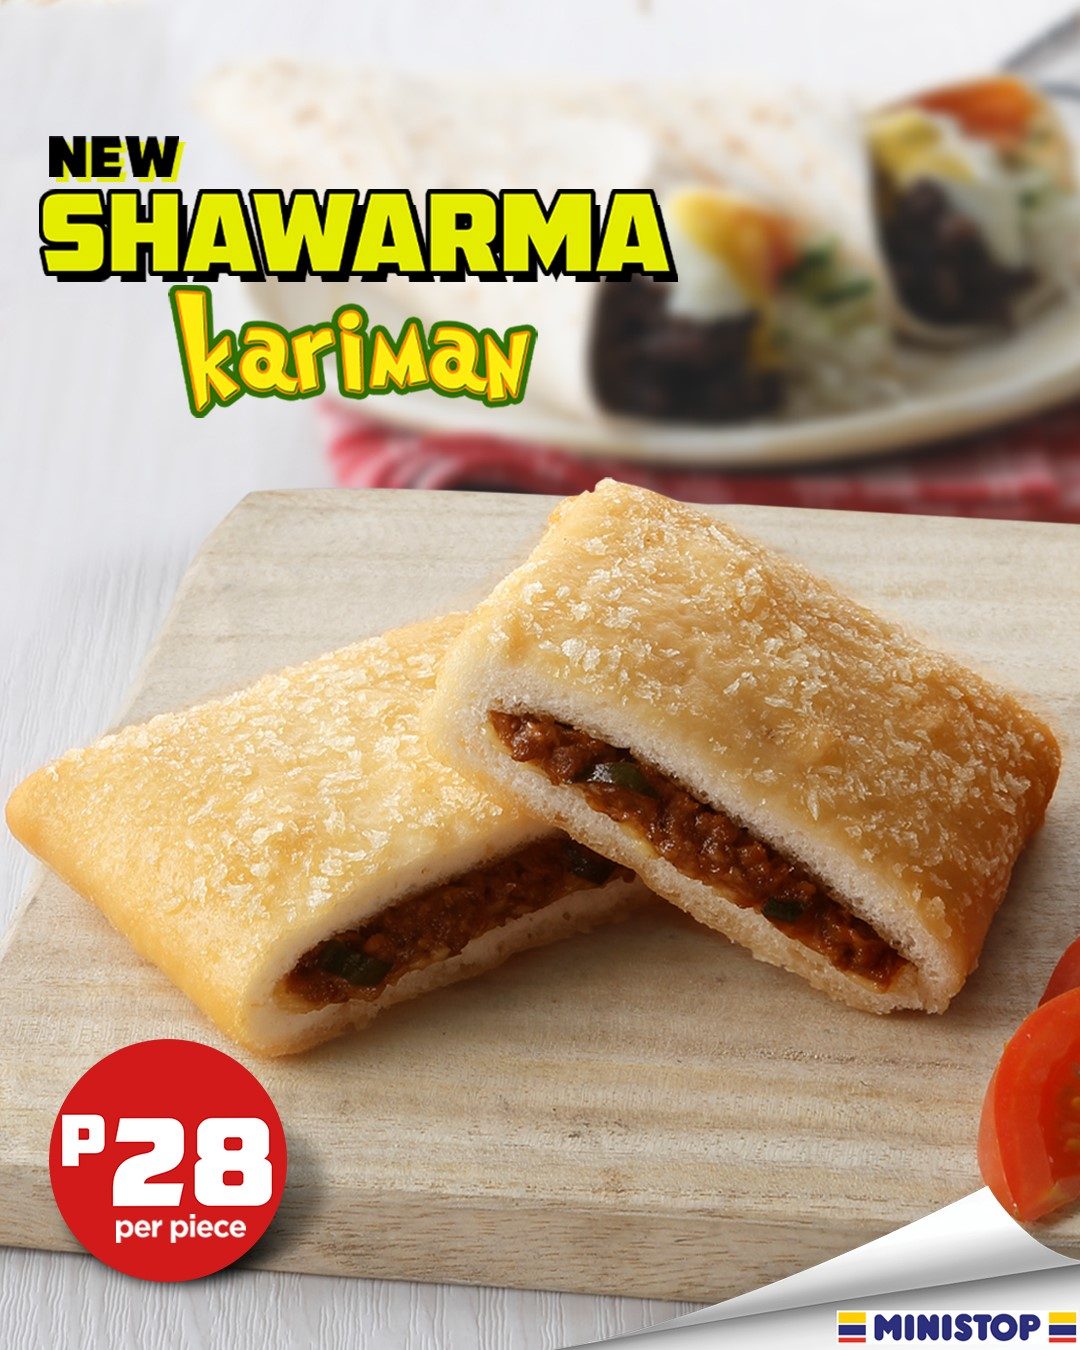 LOOK: Ministop offers new shawarma kariman